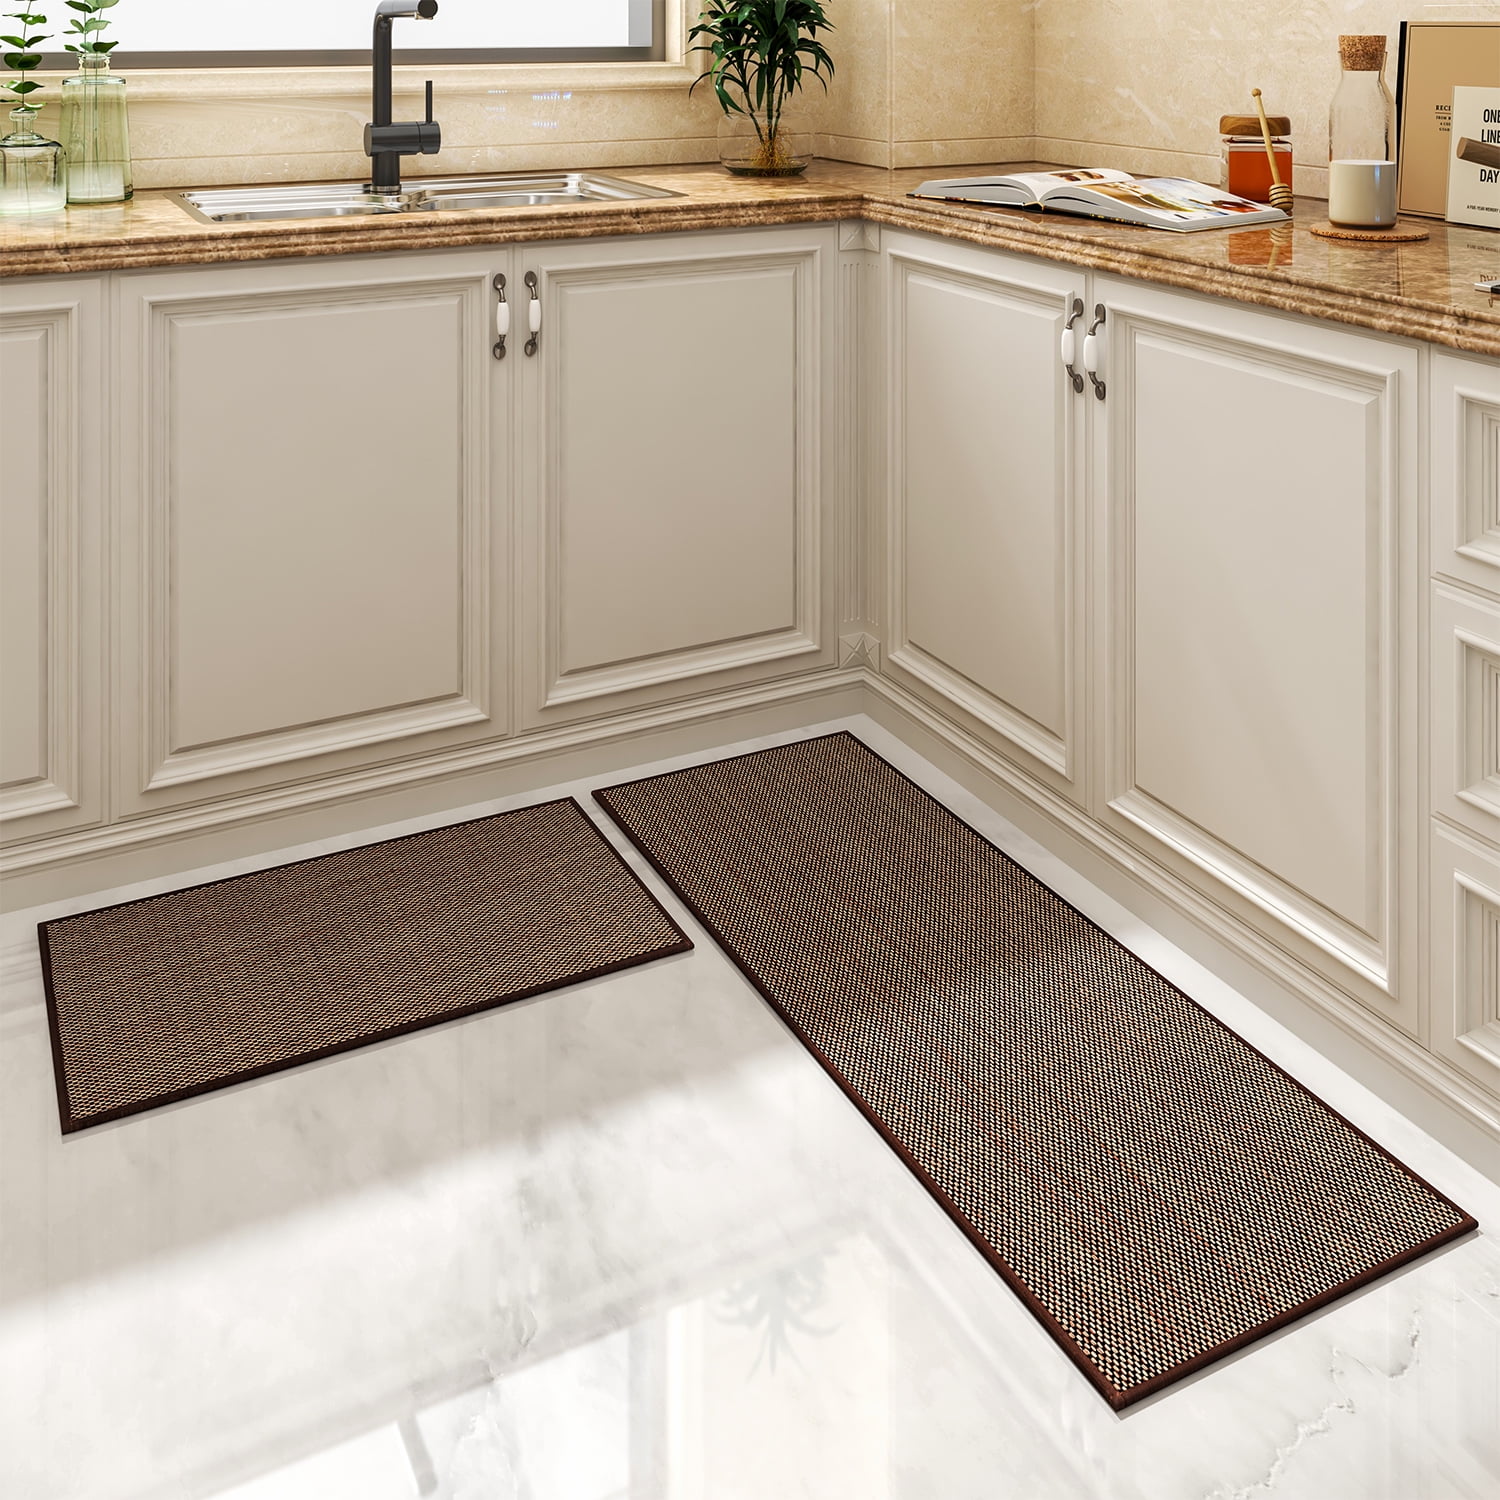 Rubber Kitchen Mats For Floor Non Skid - Jute Weave Long Hallway Runner  Rugs Laundry Room Rugs Absorbent Kitchen Sink Floor Mats - Waterproof Fall